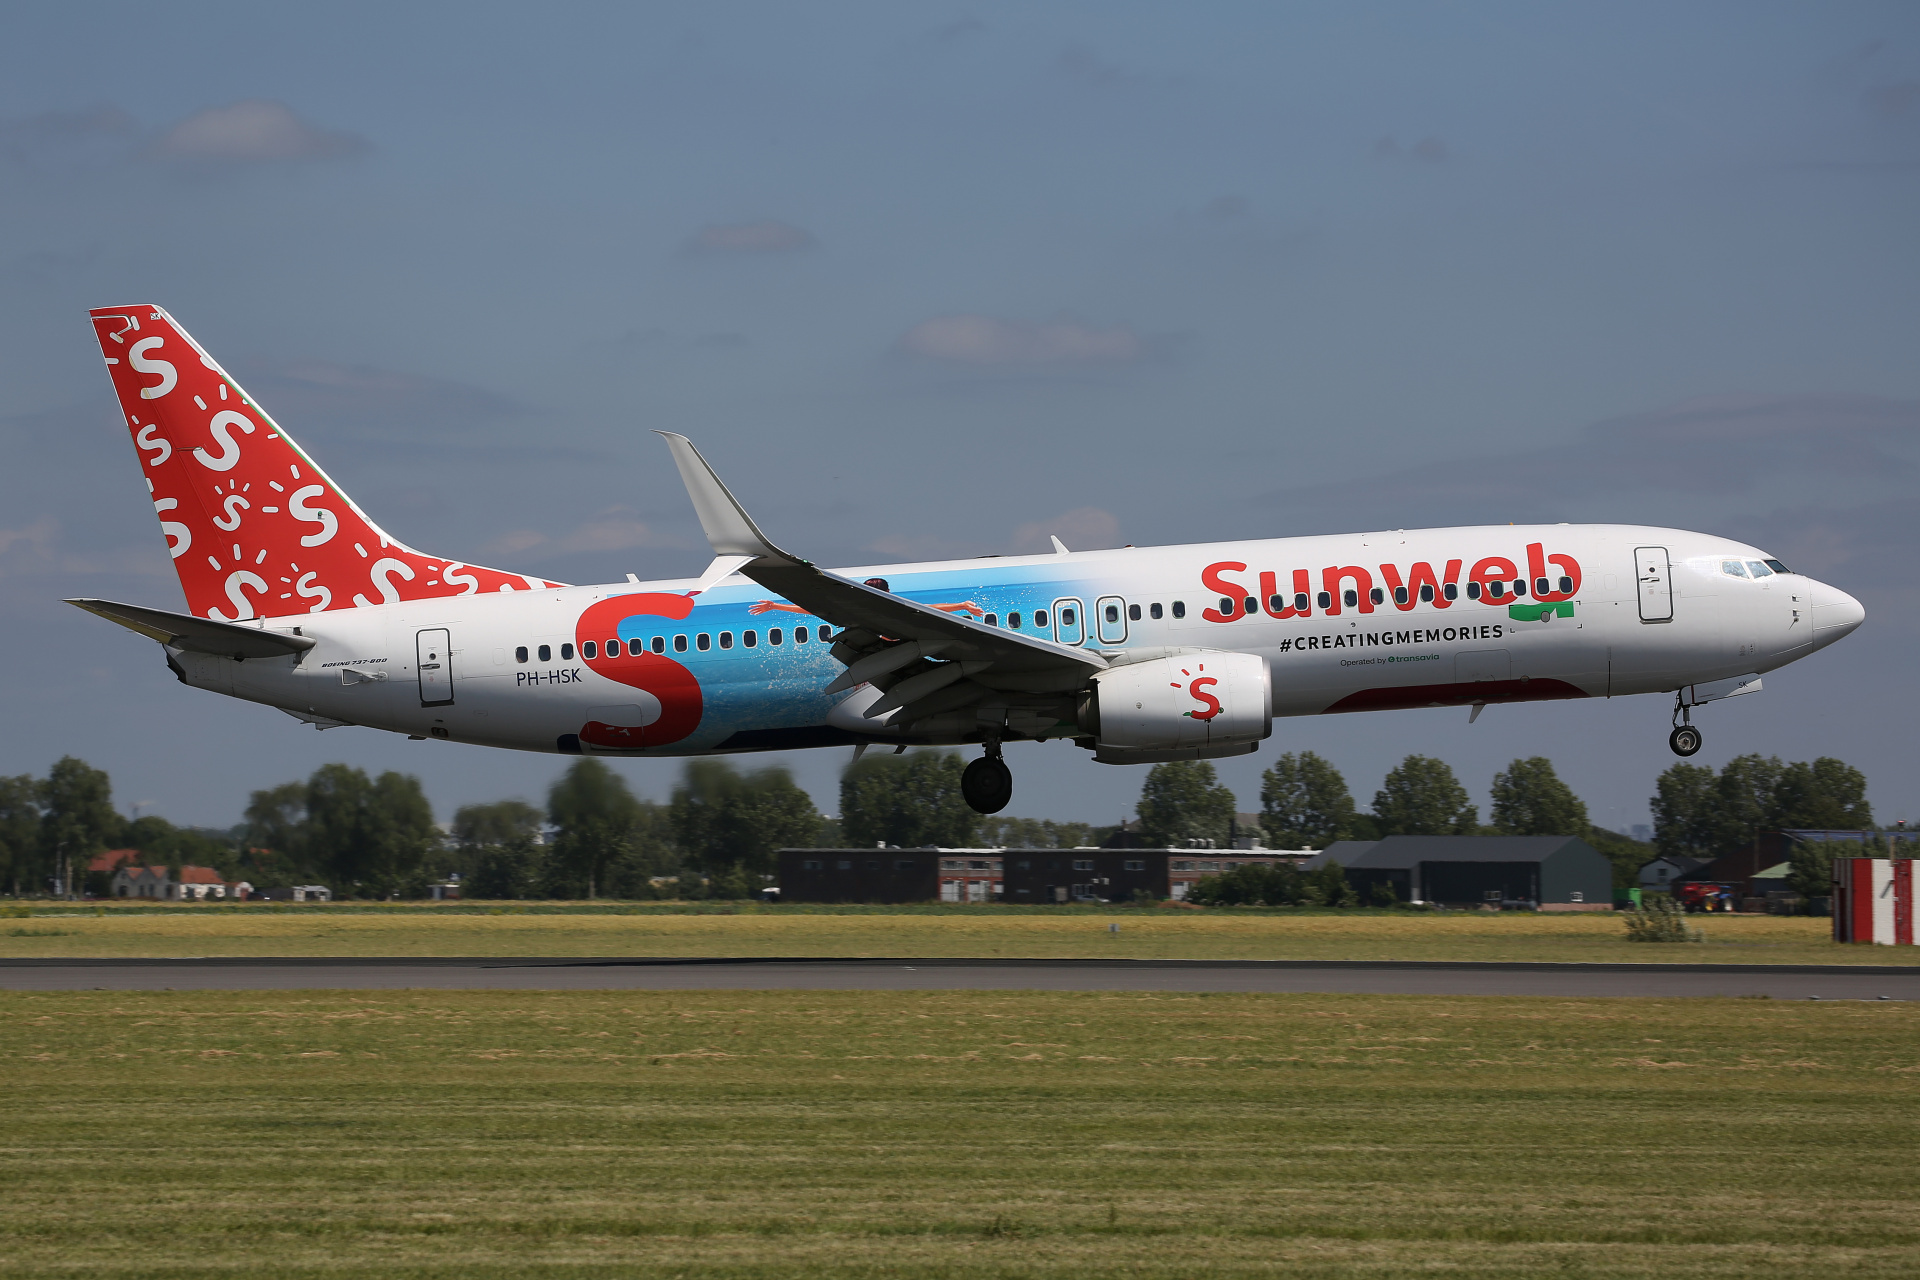 PH-HSK, Sunweb (#CreatingMemories livery) (Aircraft » Schiphol Spotting » Boeing 737-800)